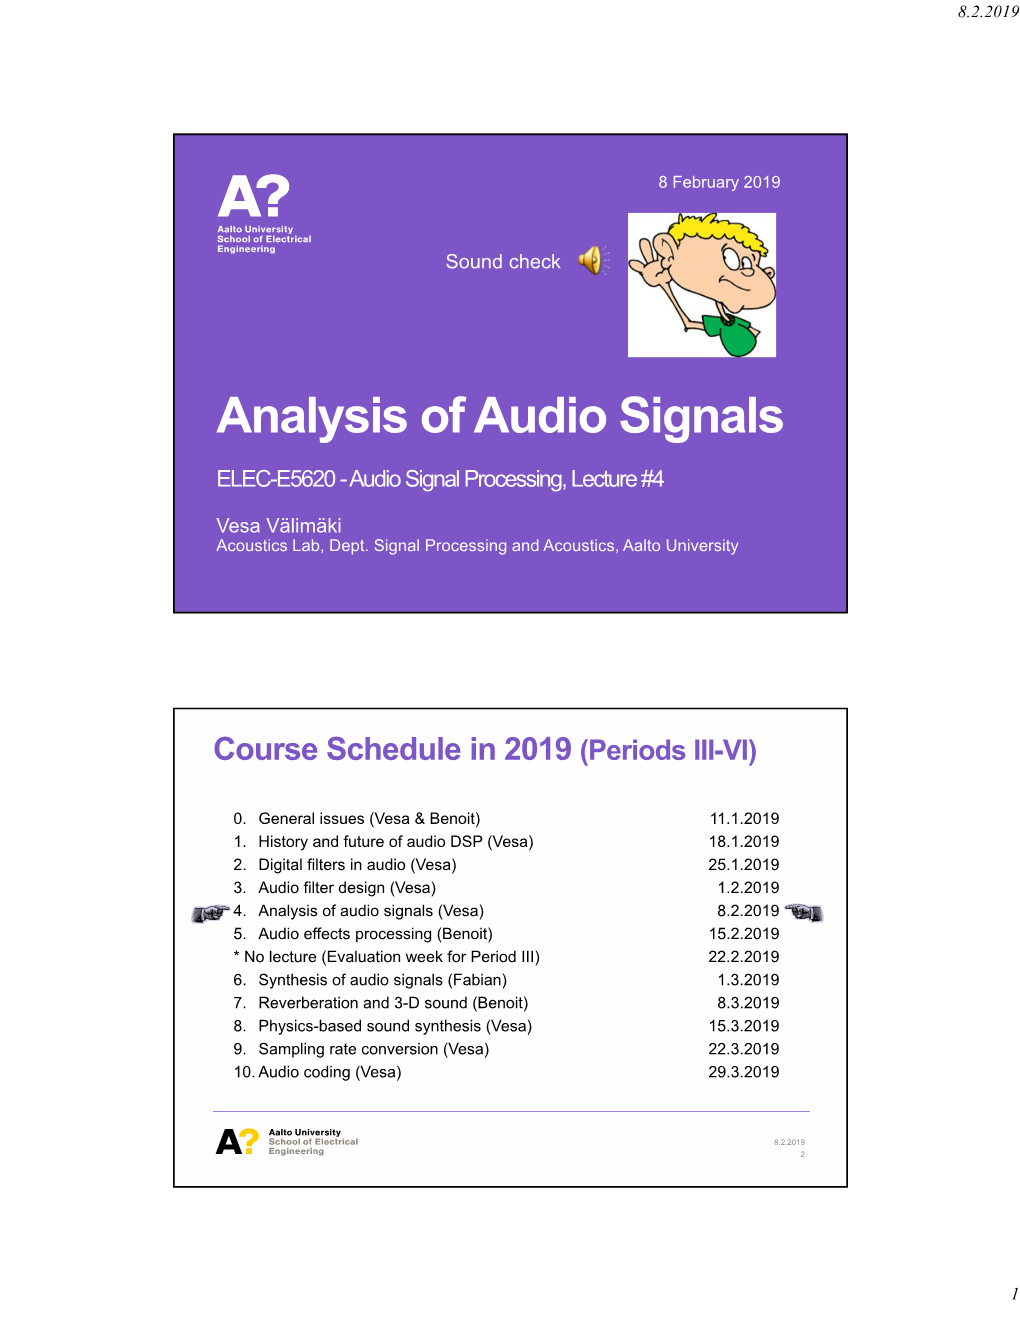 Analysis of Audio Signals